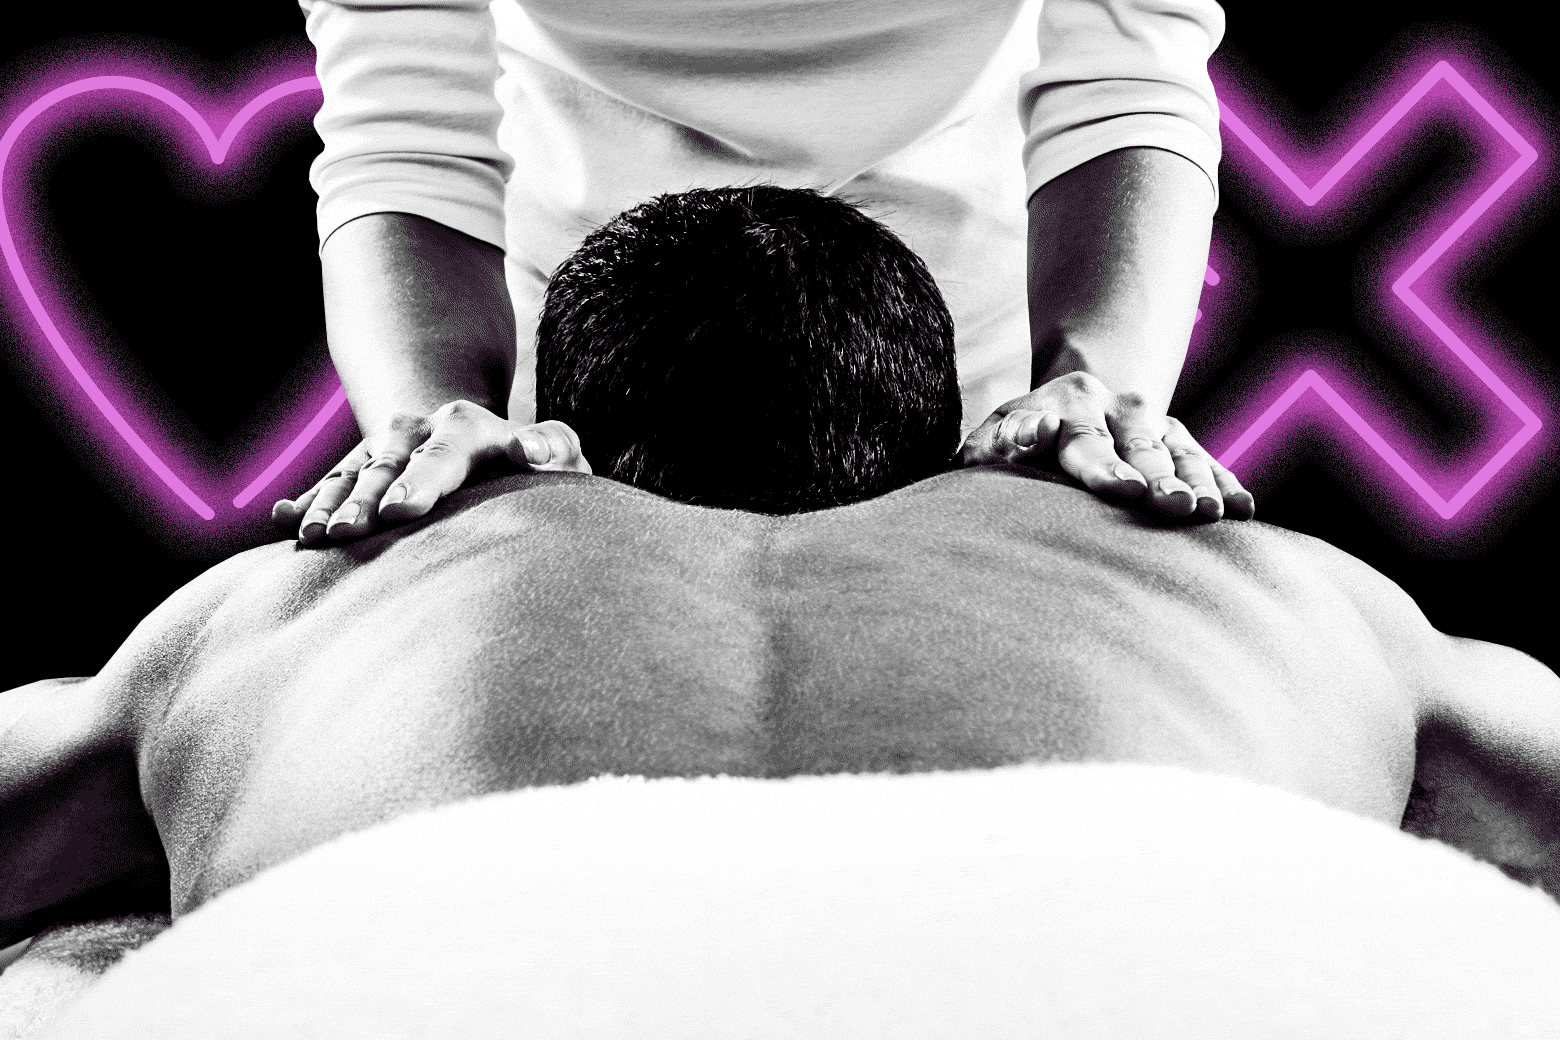 agata klos recommends massage parlor erotic stories pic